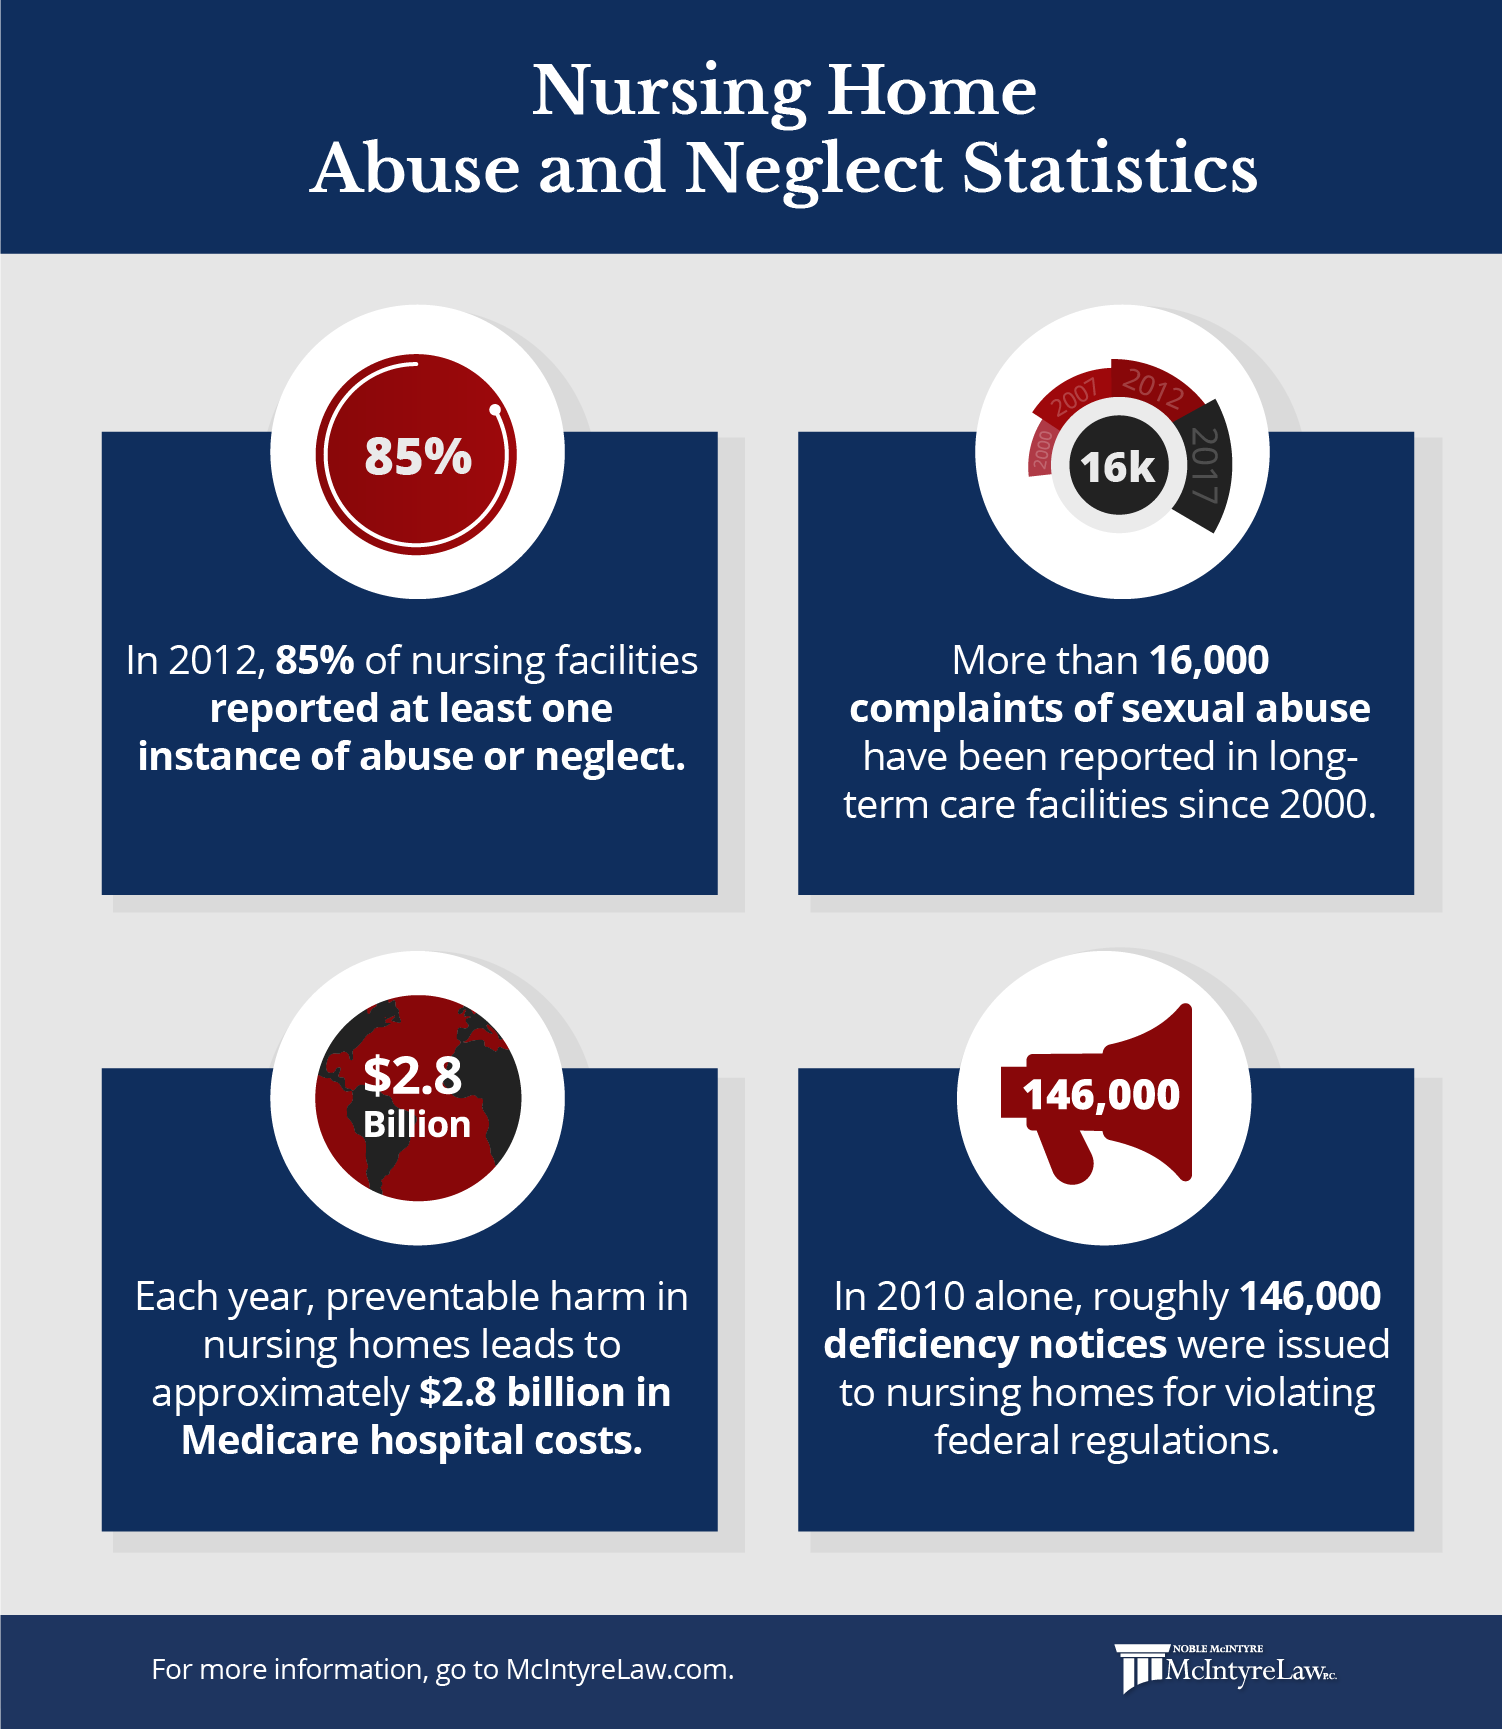 Nursing home abuse and neglect statistics